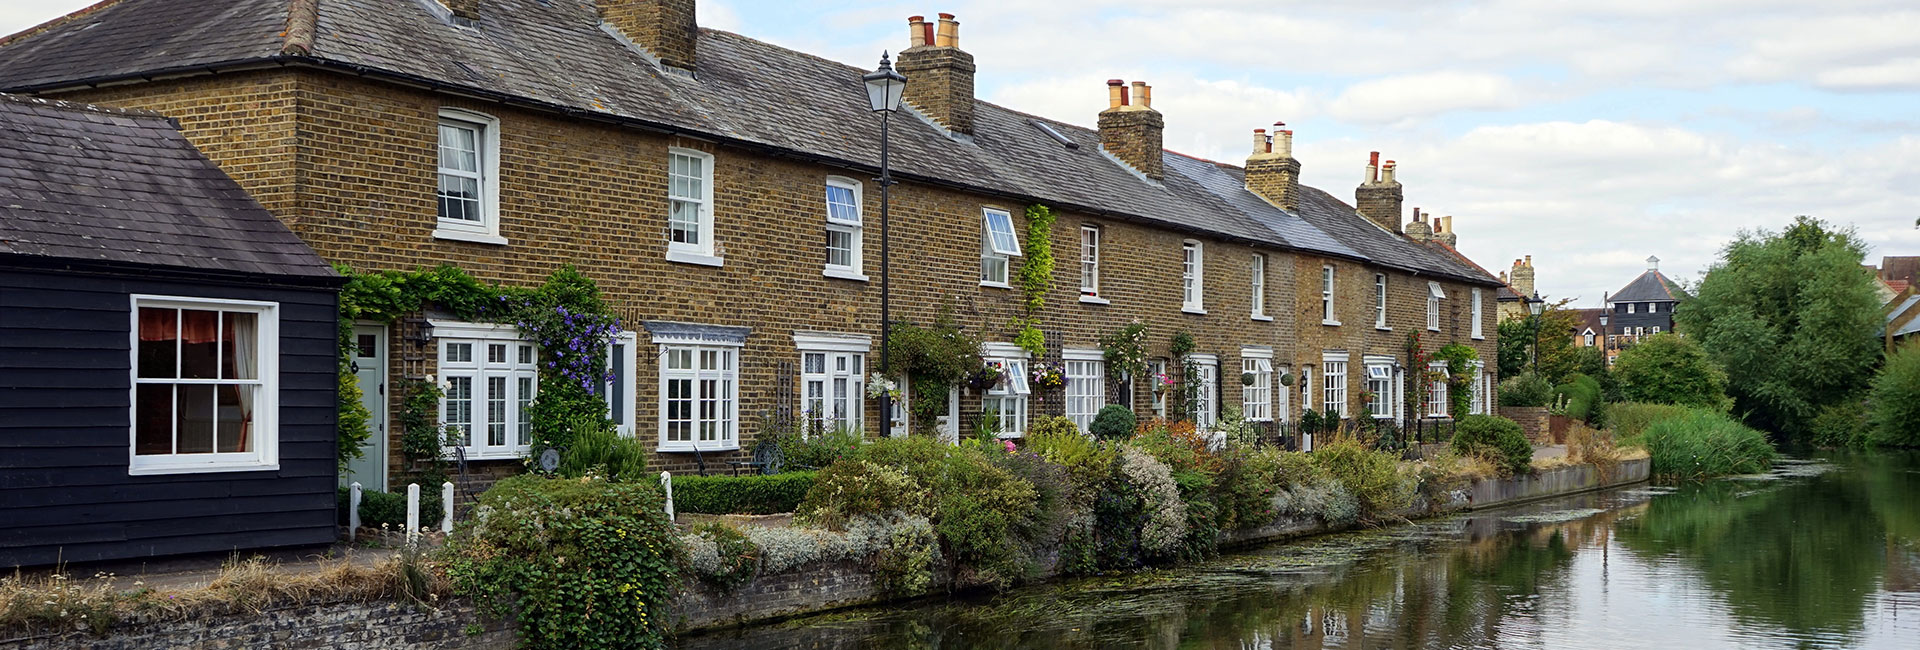 Row of houses - UK Property market - Property Activity